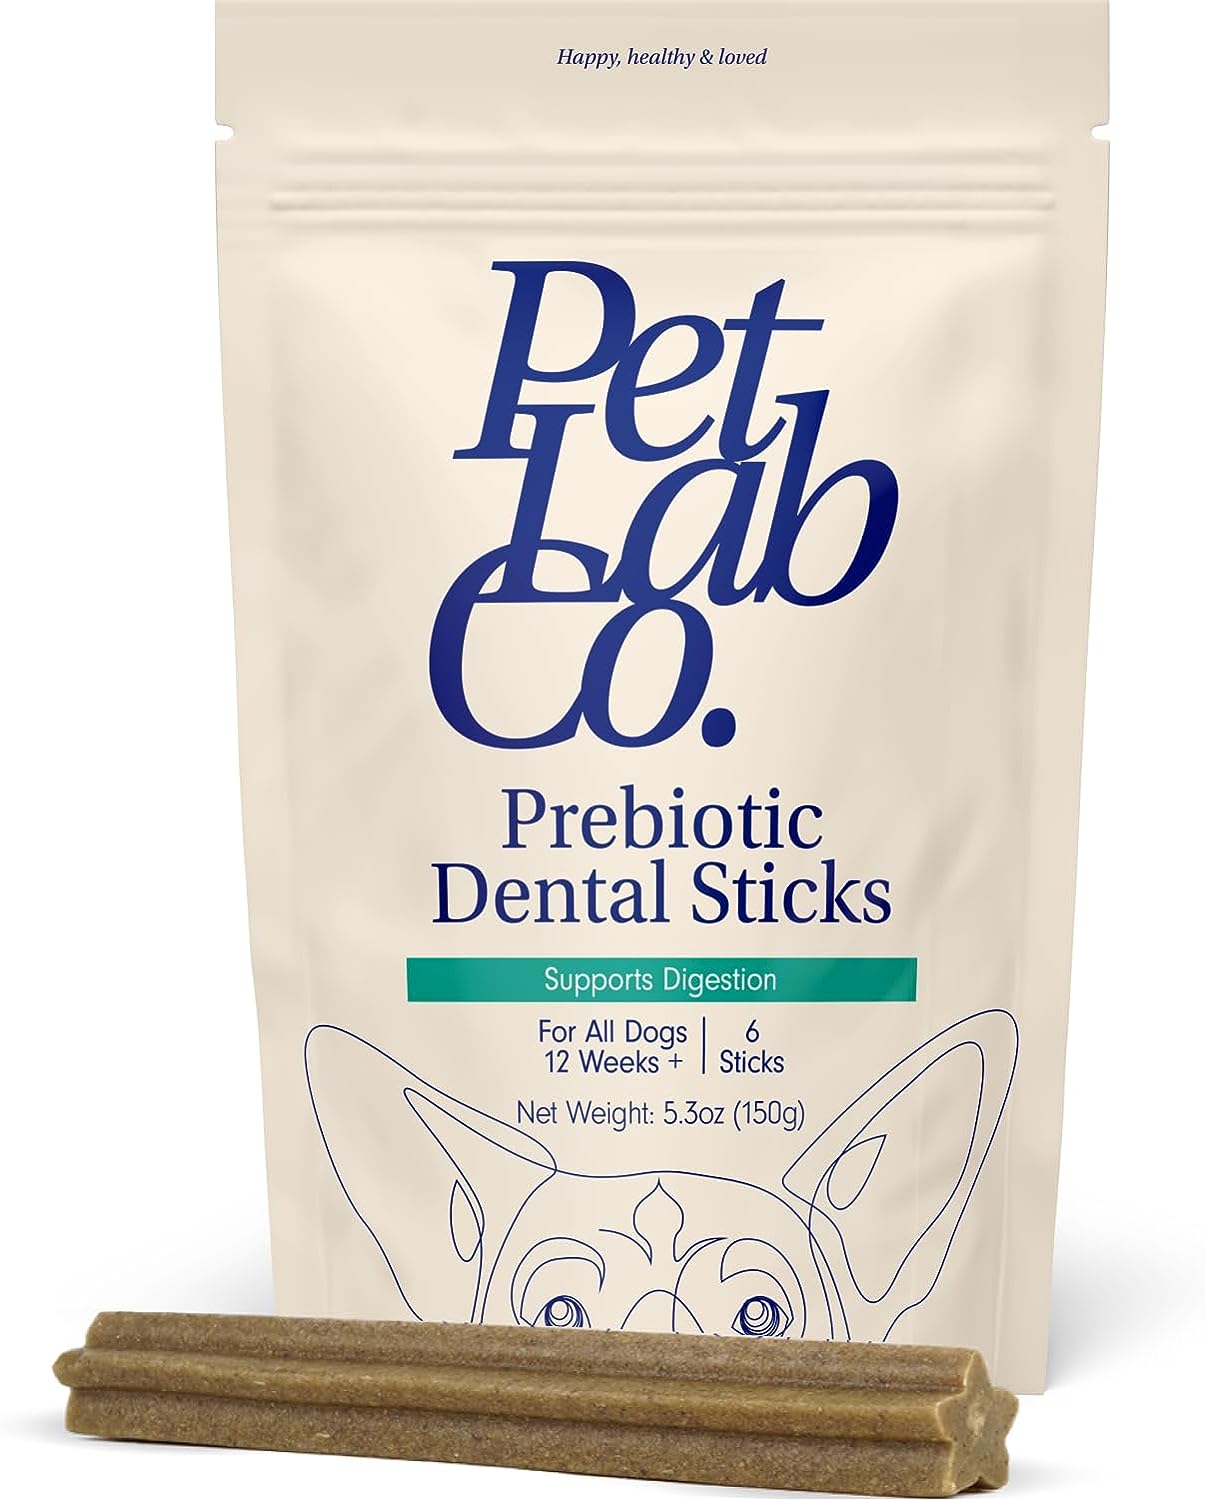 petlab co. dental sticks